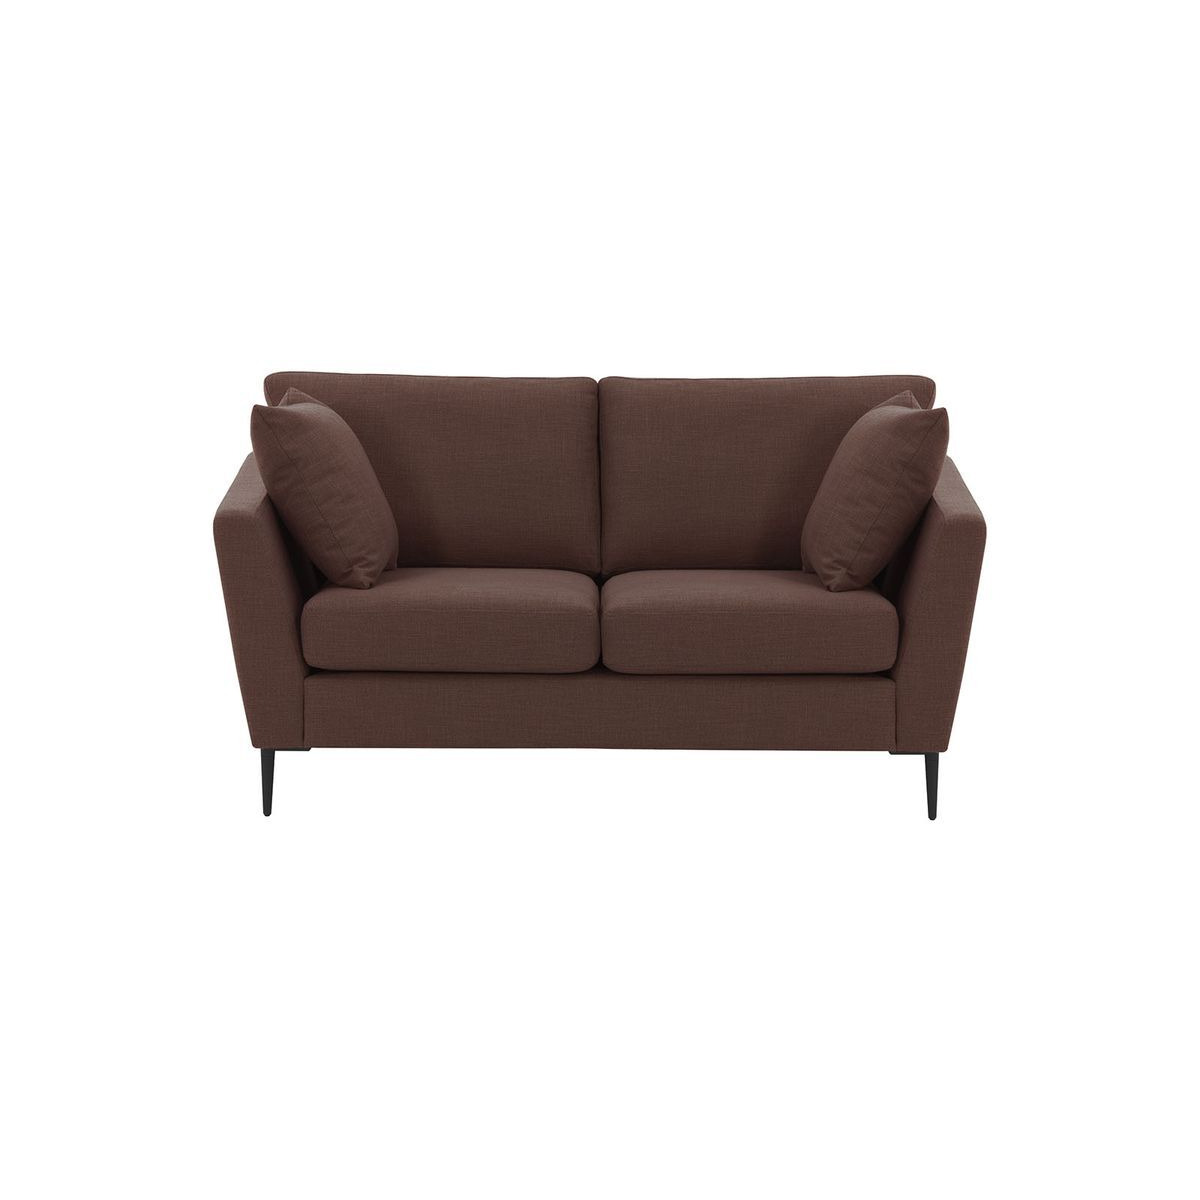 Imani 2 Seater Sofa, burgundy - image 1